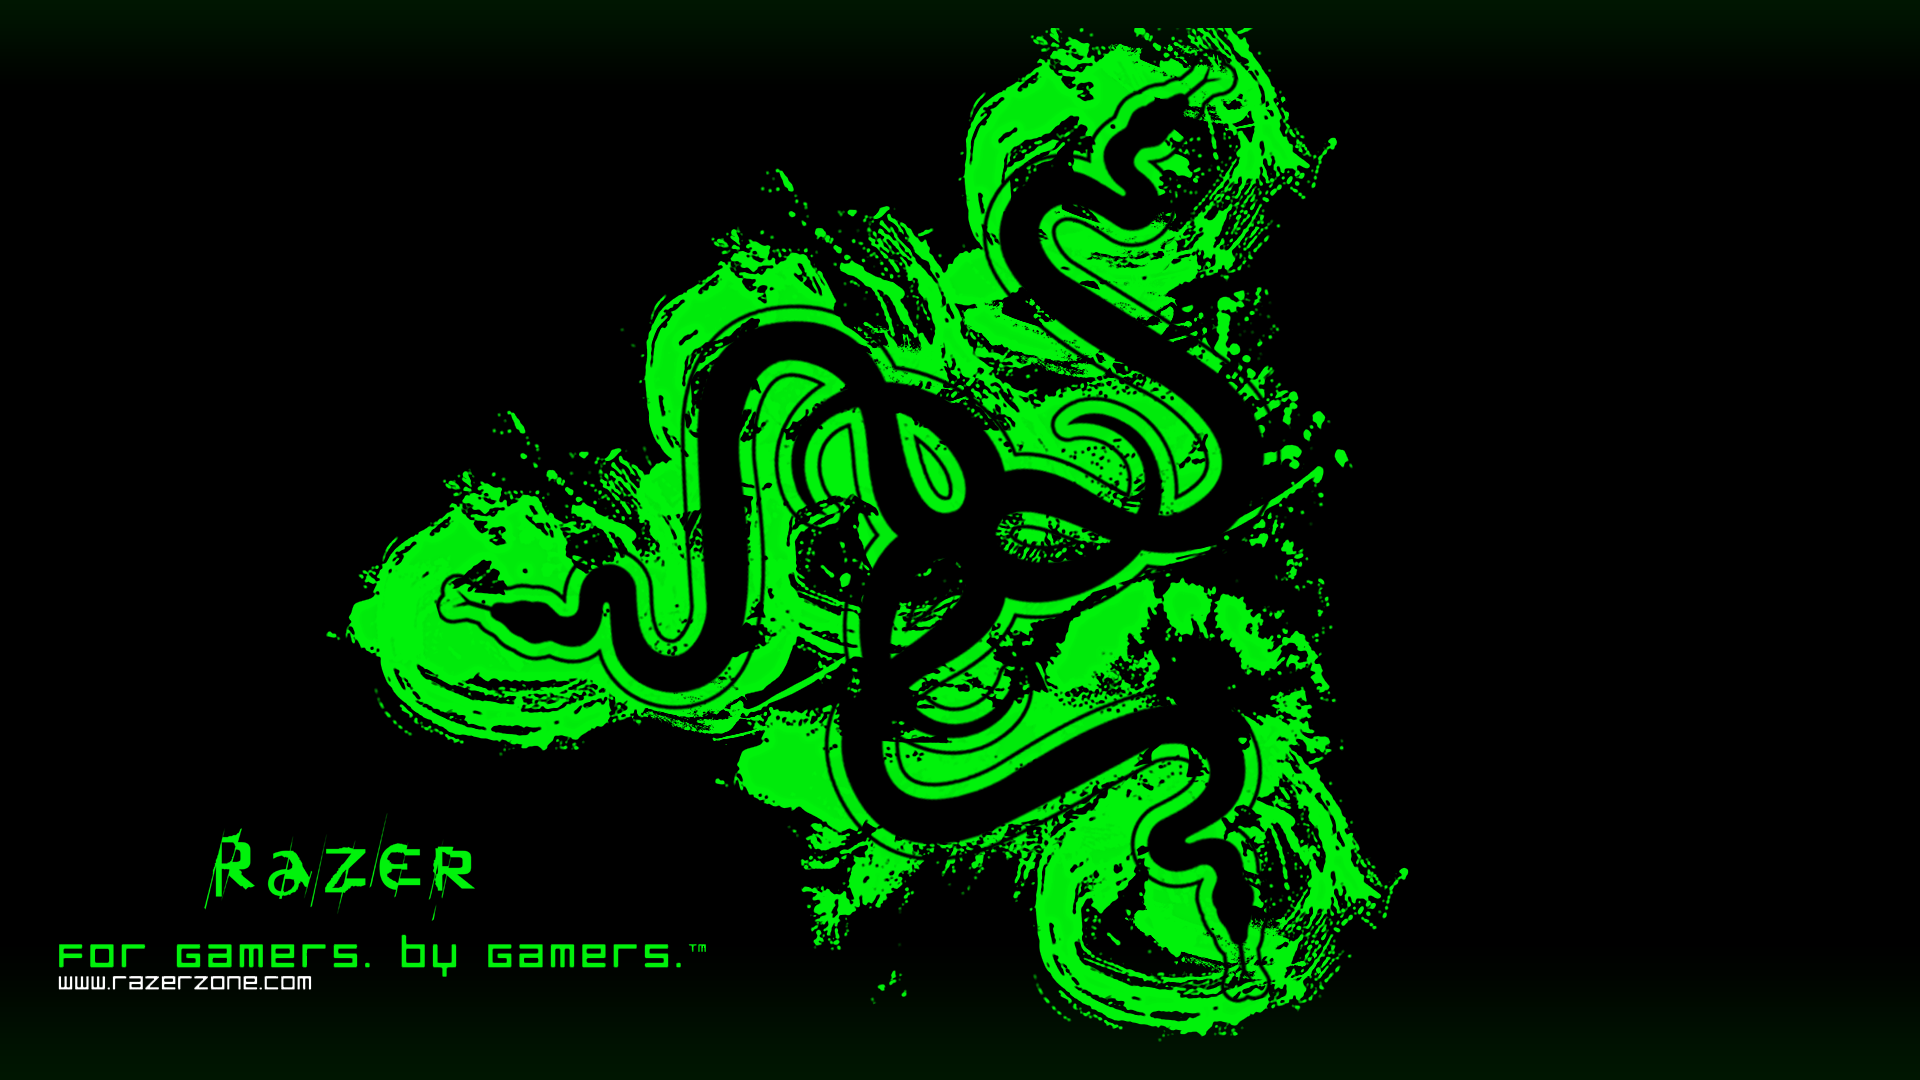 Razer Gaming Backgrounds